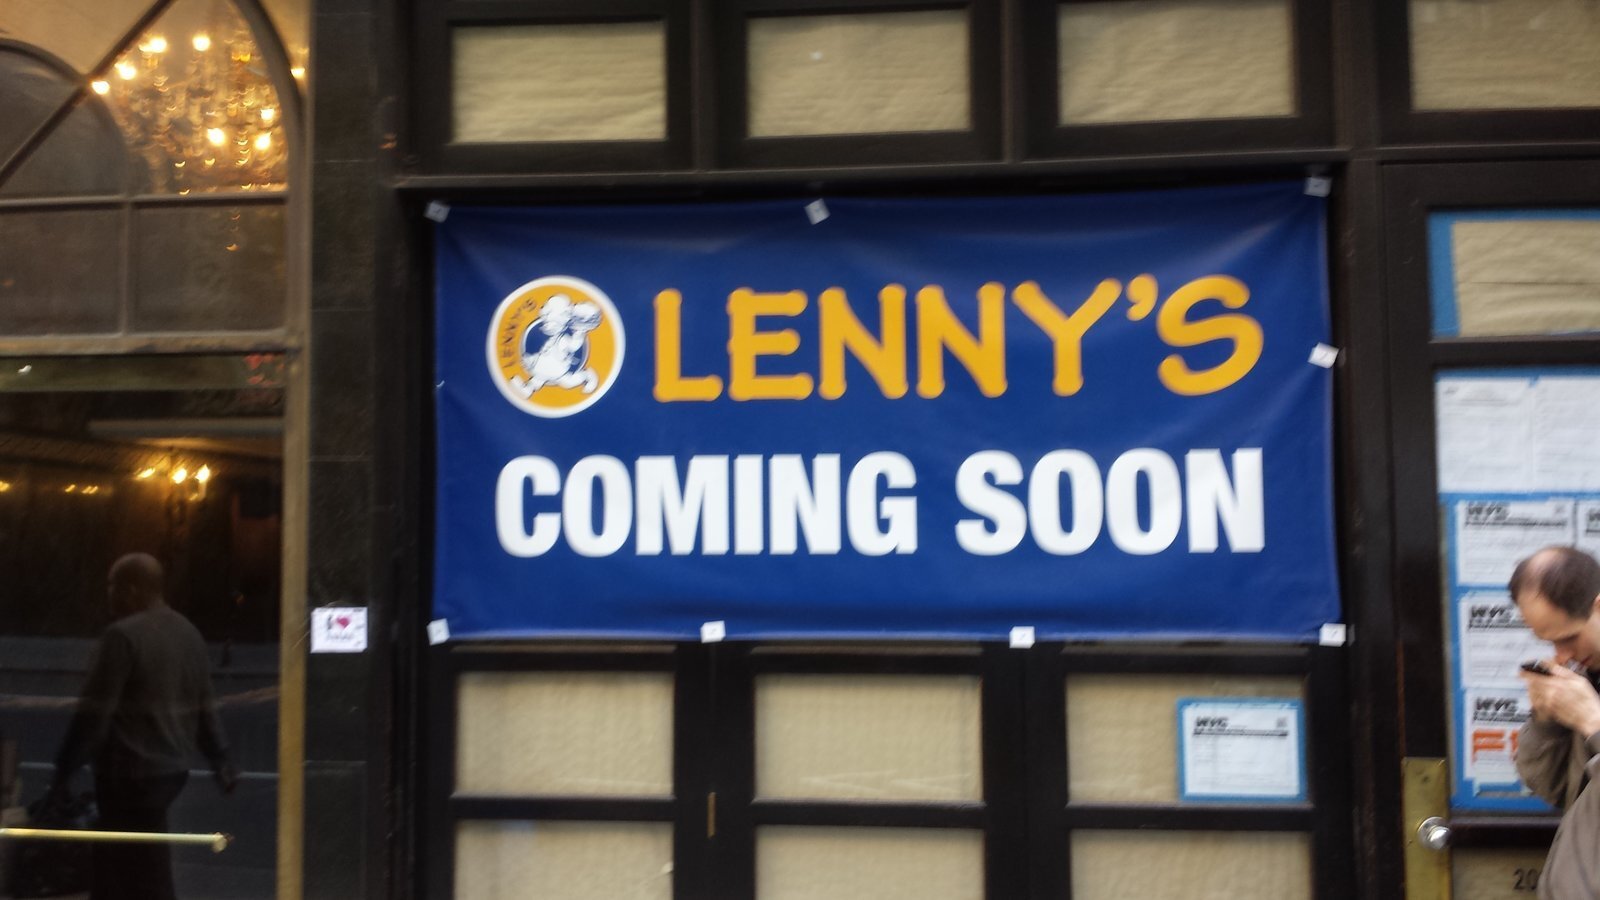 'Lennys'